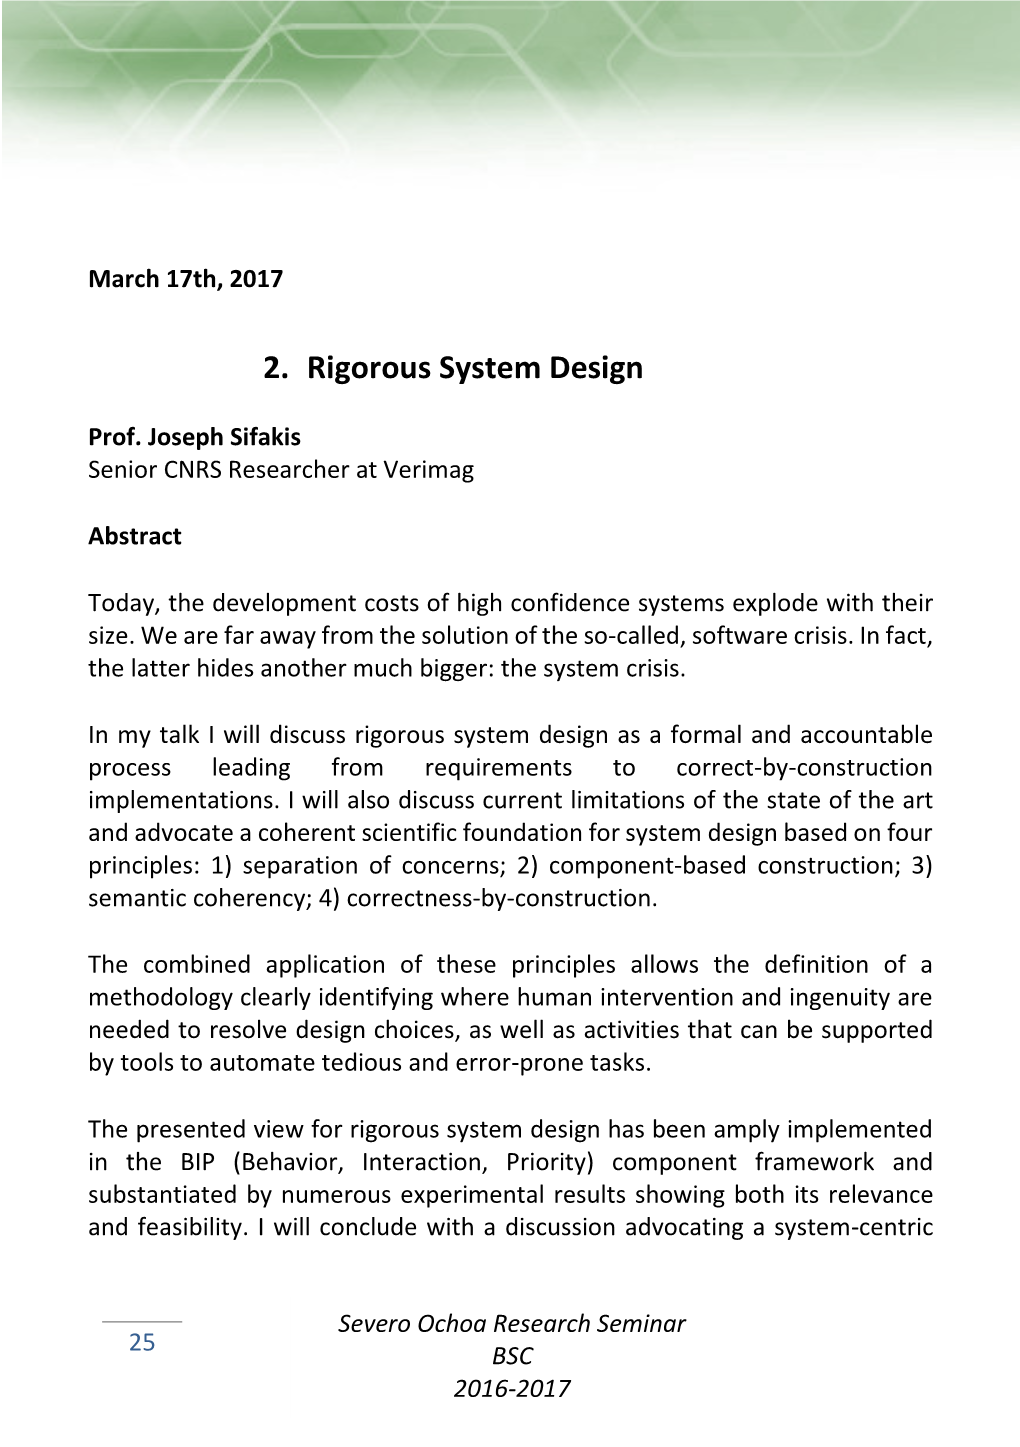 2. Rigorous System Design